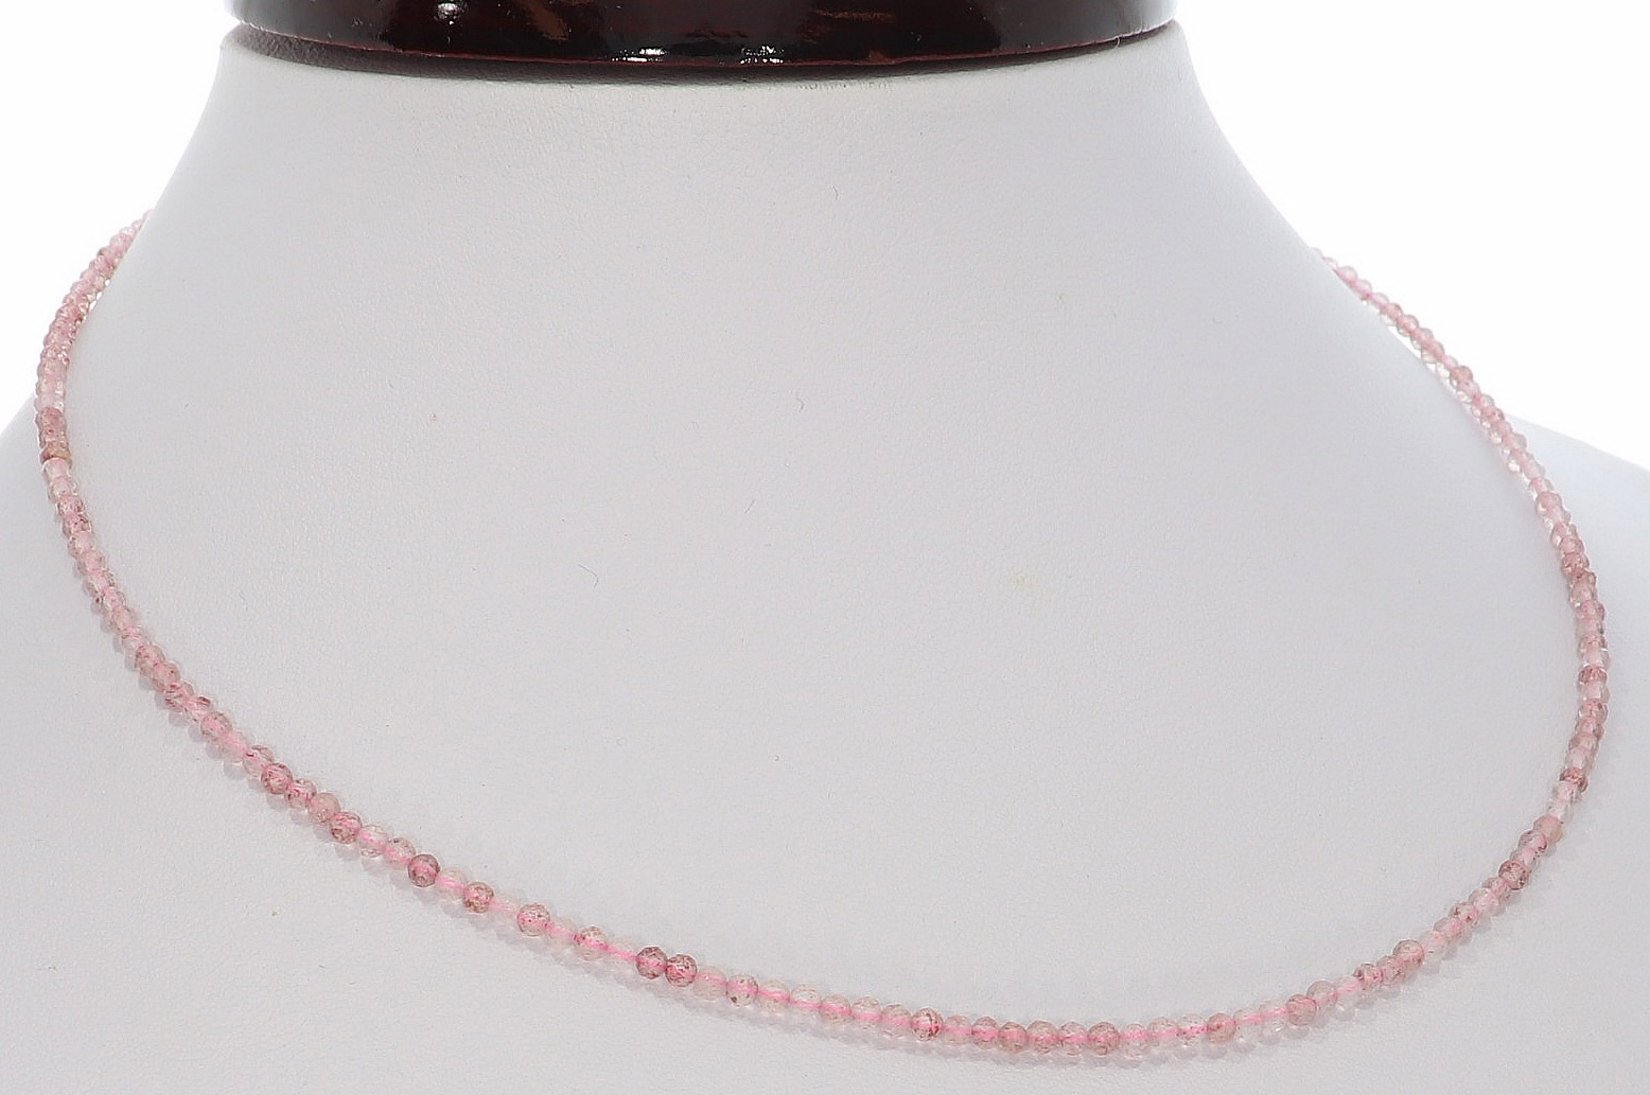 Erdbeerquarz Kugel Halskette facettiert Silber farben 2mm - 40-45cm Kettenverlängerer KK315